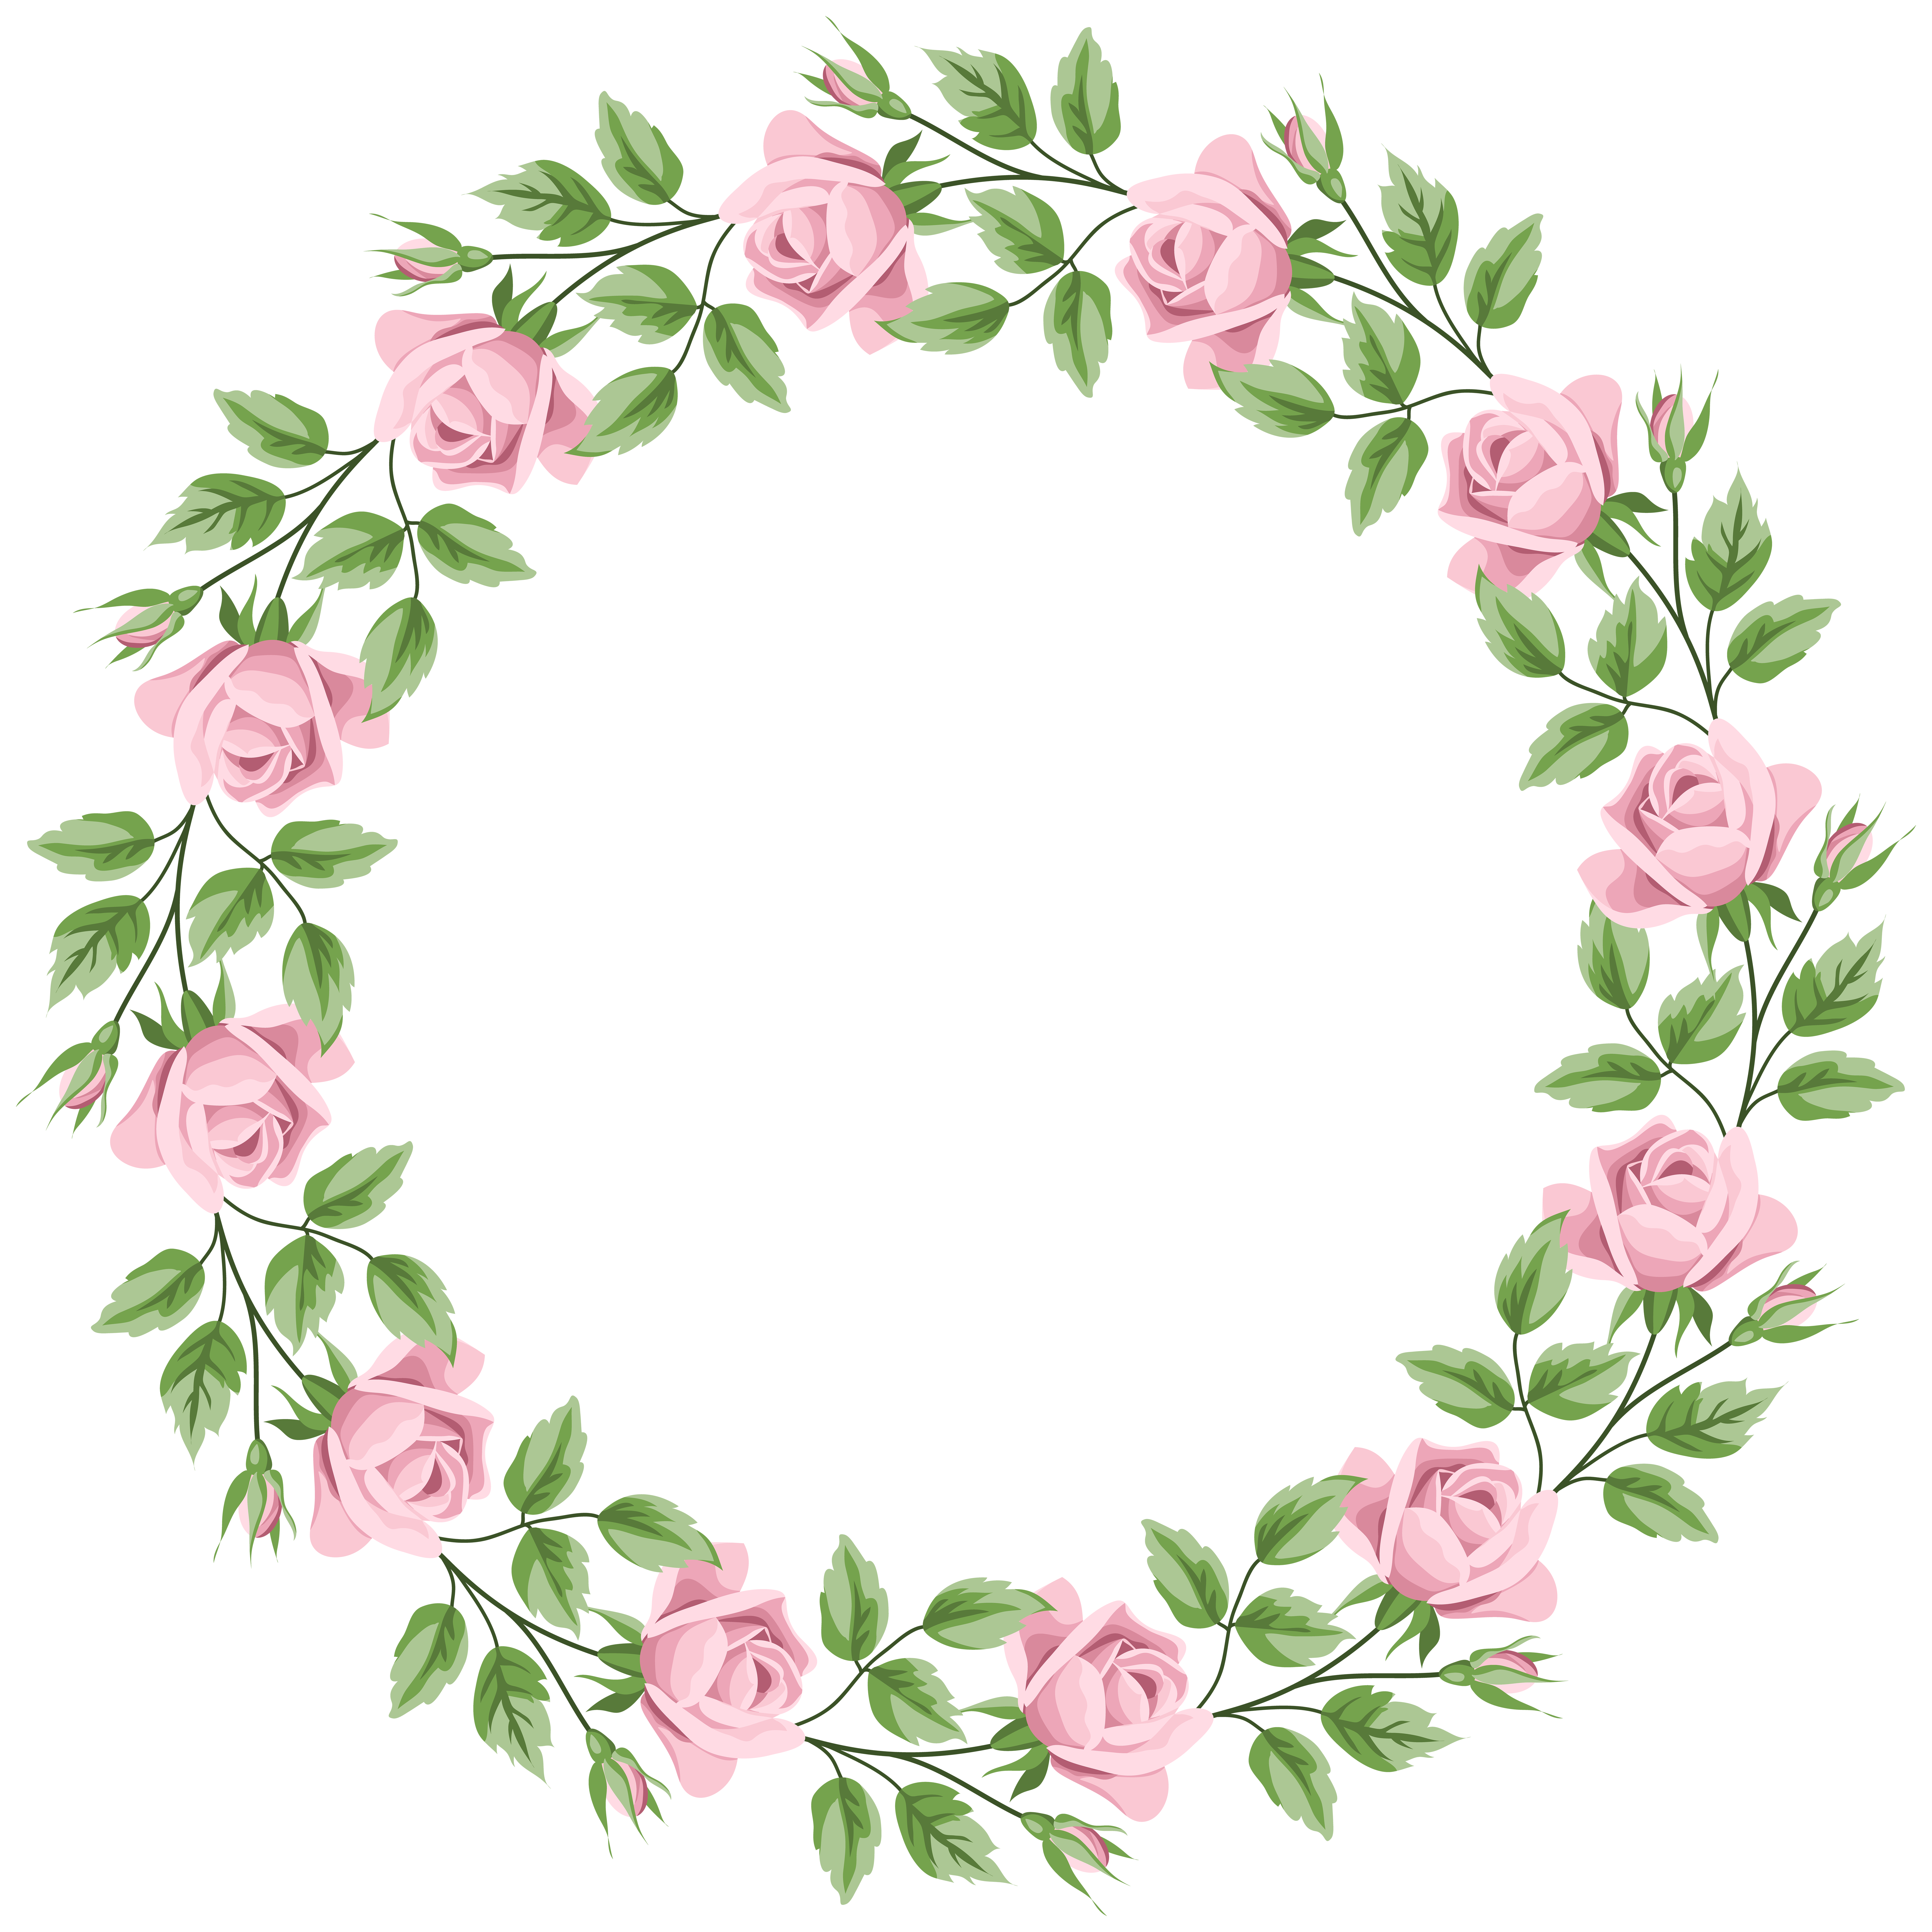 pinkroses-flower-border-flower-border-png-clip-art-borders-images-and